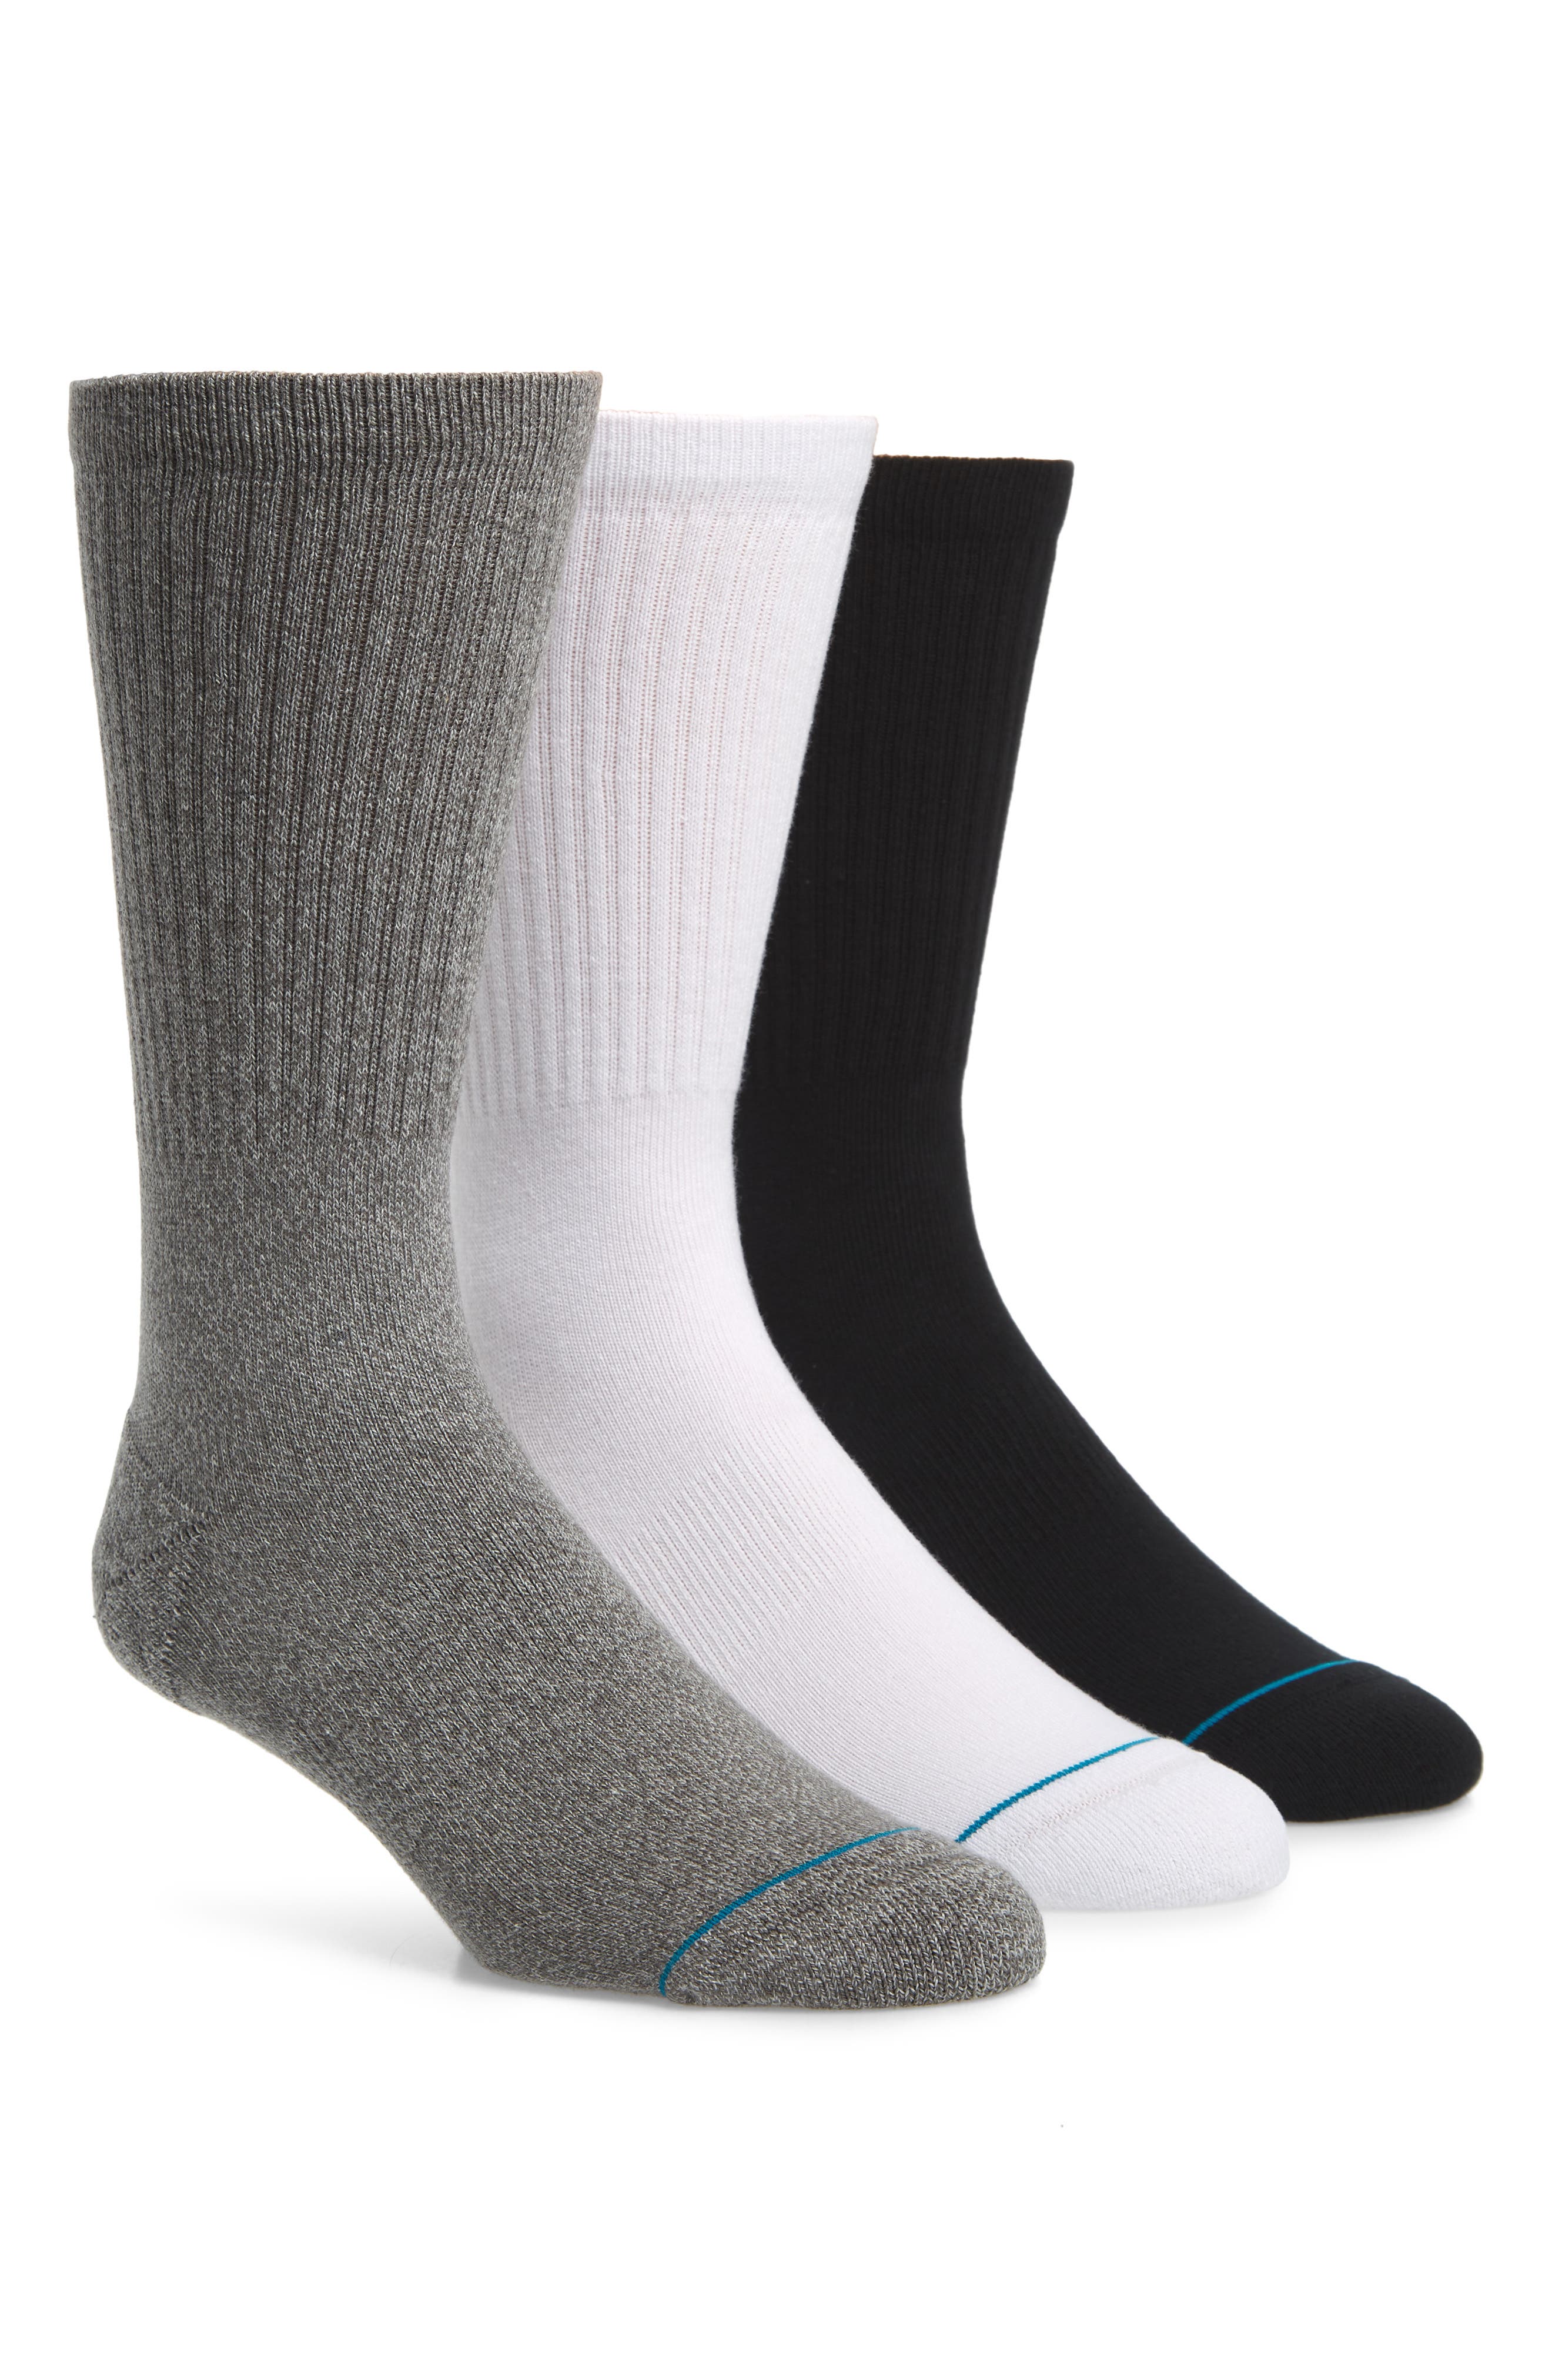 Stance Men's Boyes Grey Athletic Crew Socks Large 9-12 Grey 